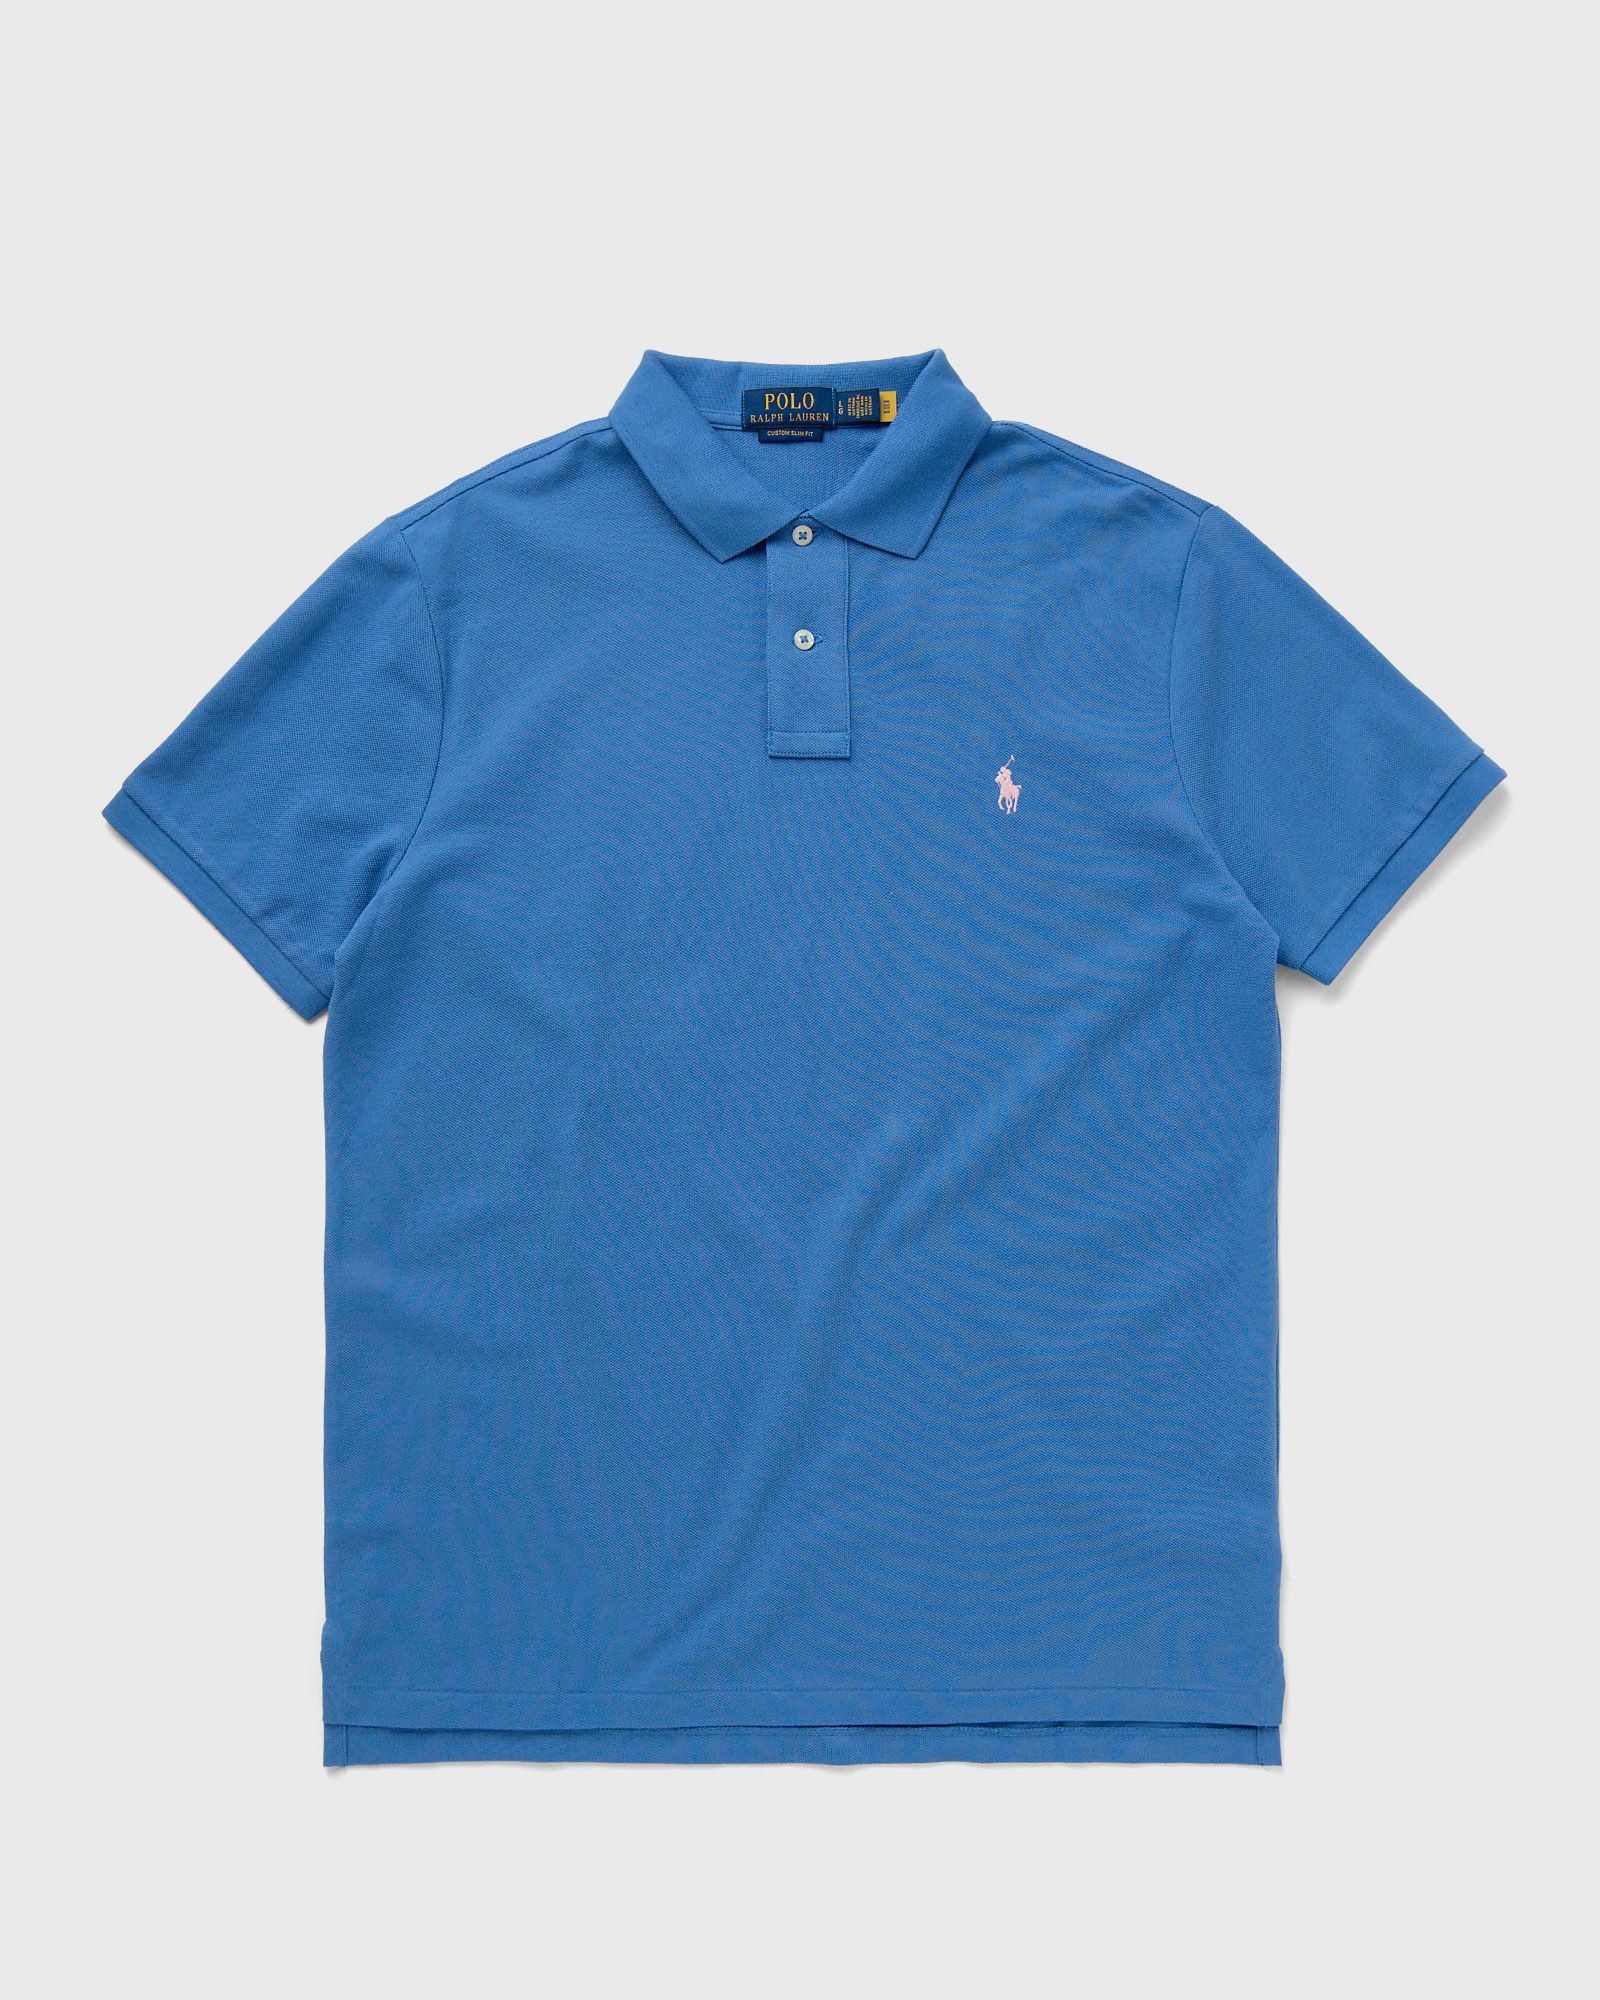 Polo Ralph Lauren - short sleeve-knit men polos blue in größe:l